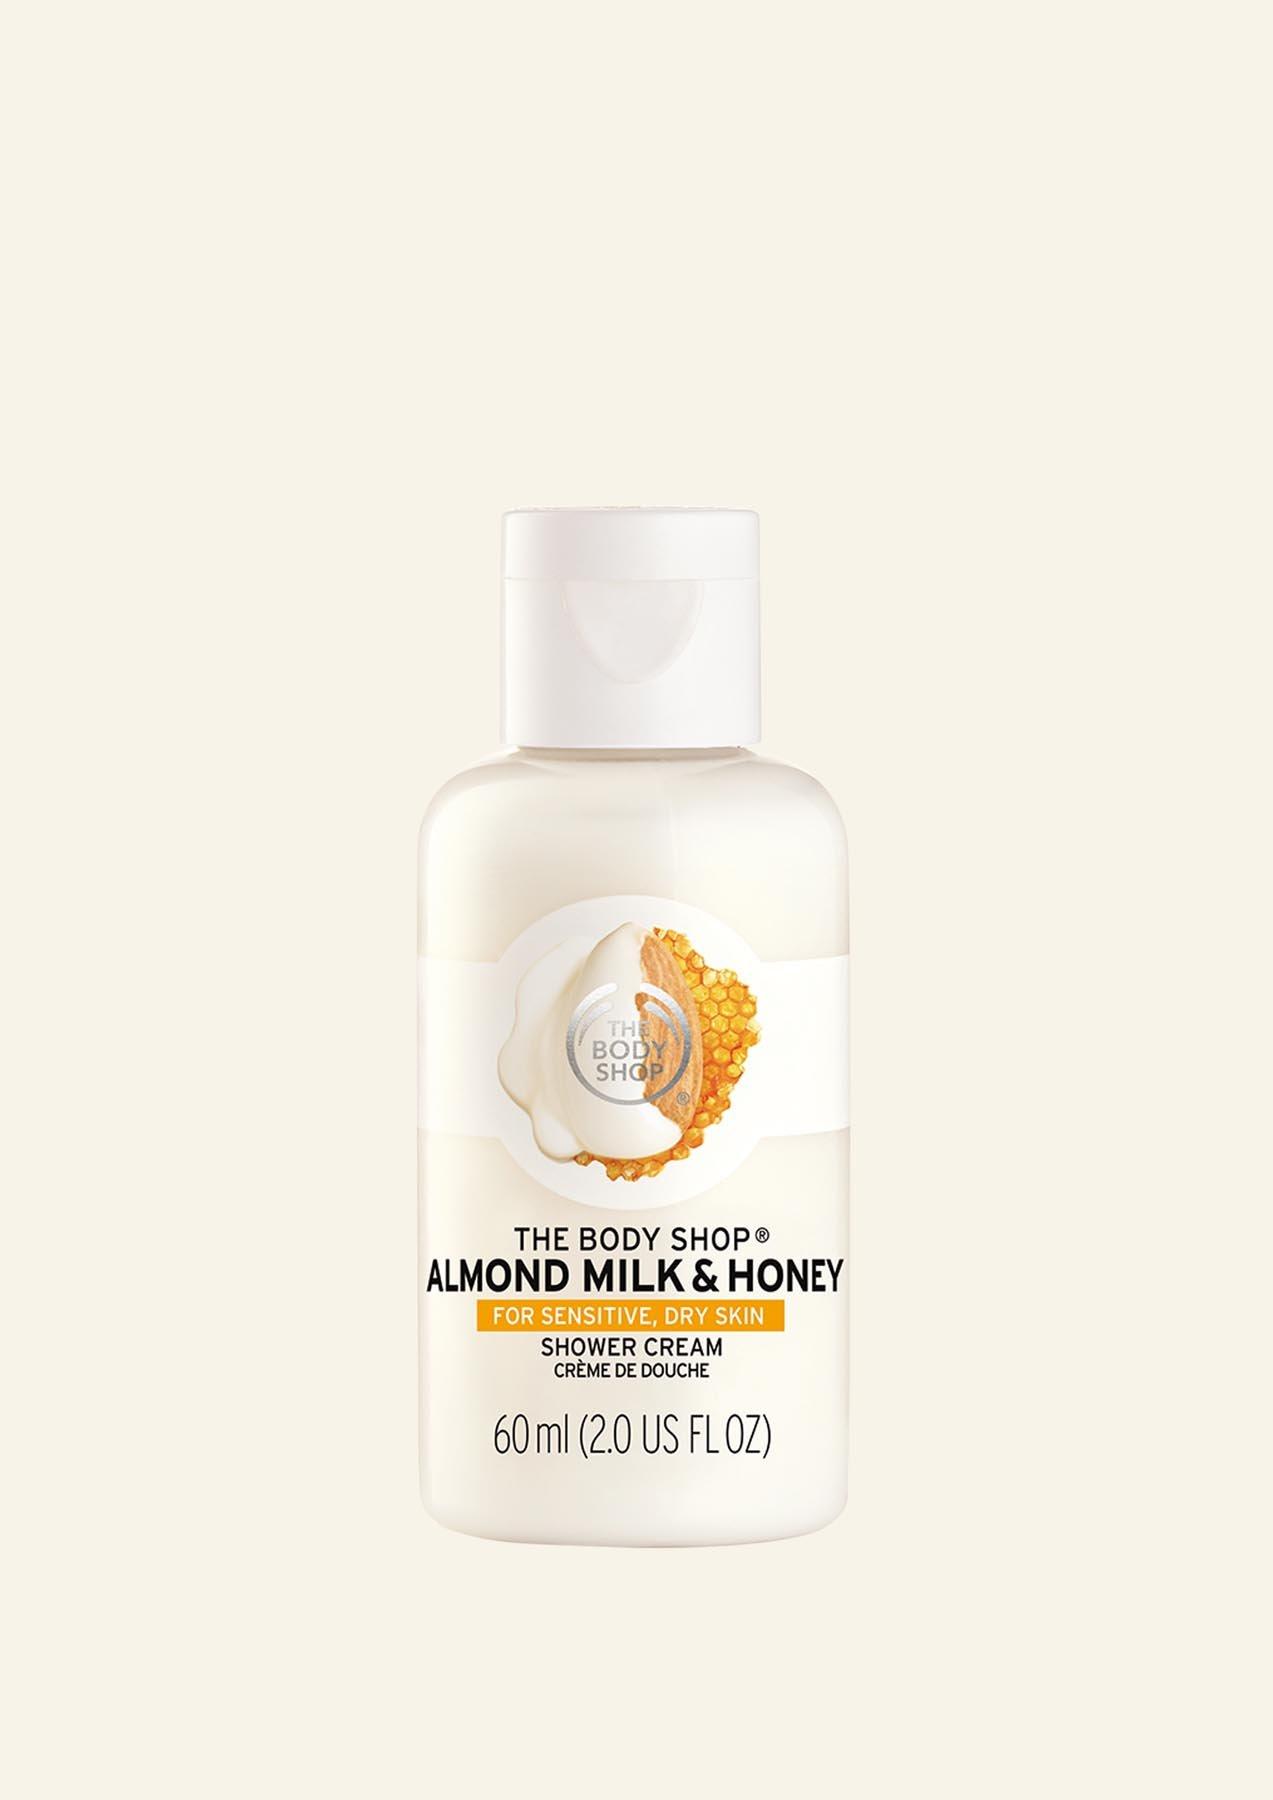 Almond Milk & Honey The Body Shop